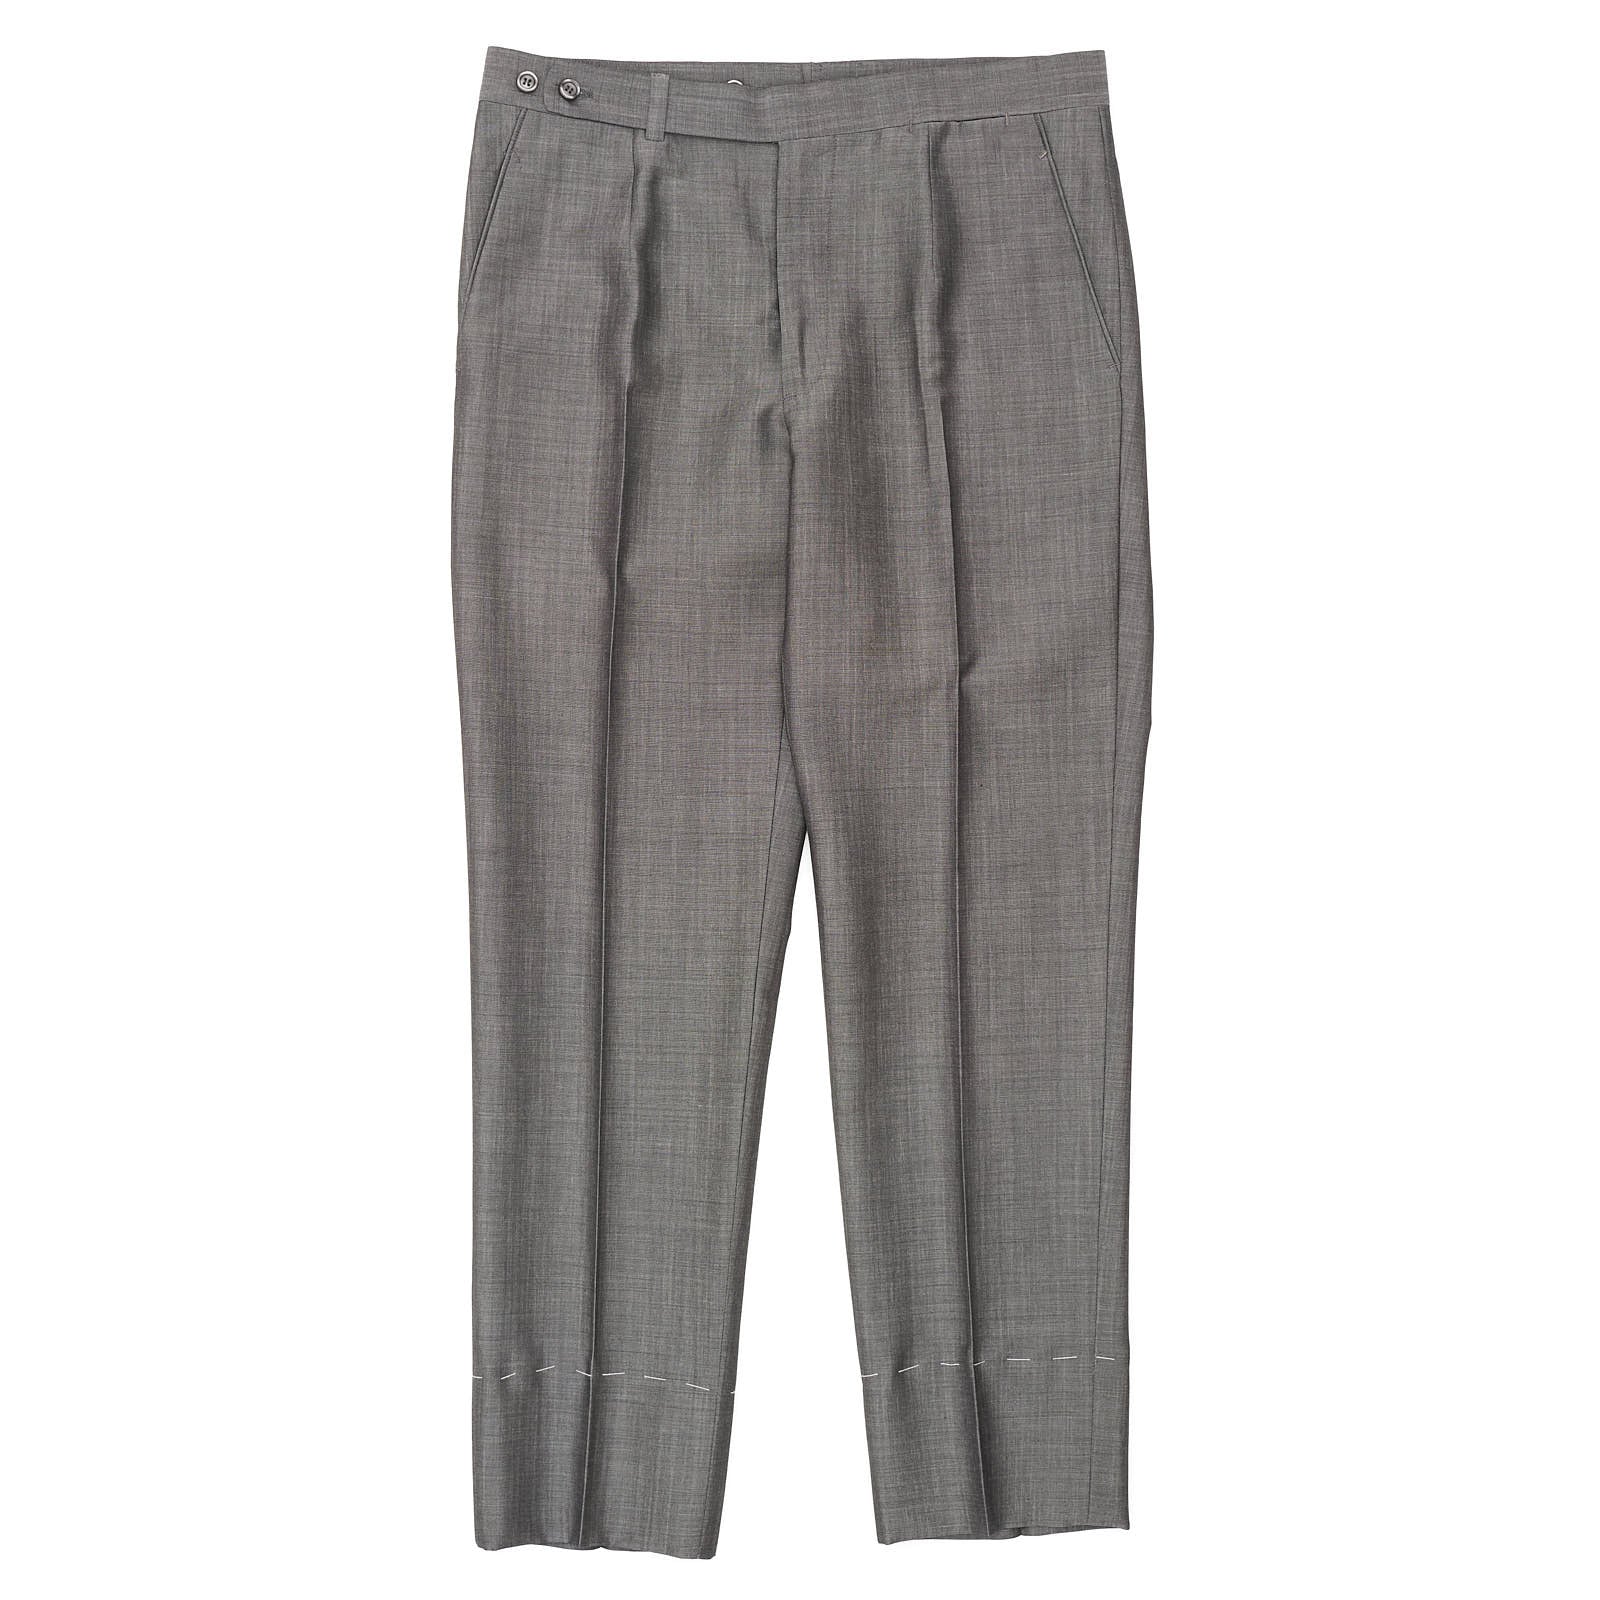 BESPOKE ATHENS Handmade Gray Wool-Mohair Flat Front Pants EU 50 NEW US 34